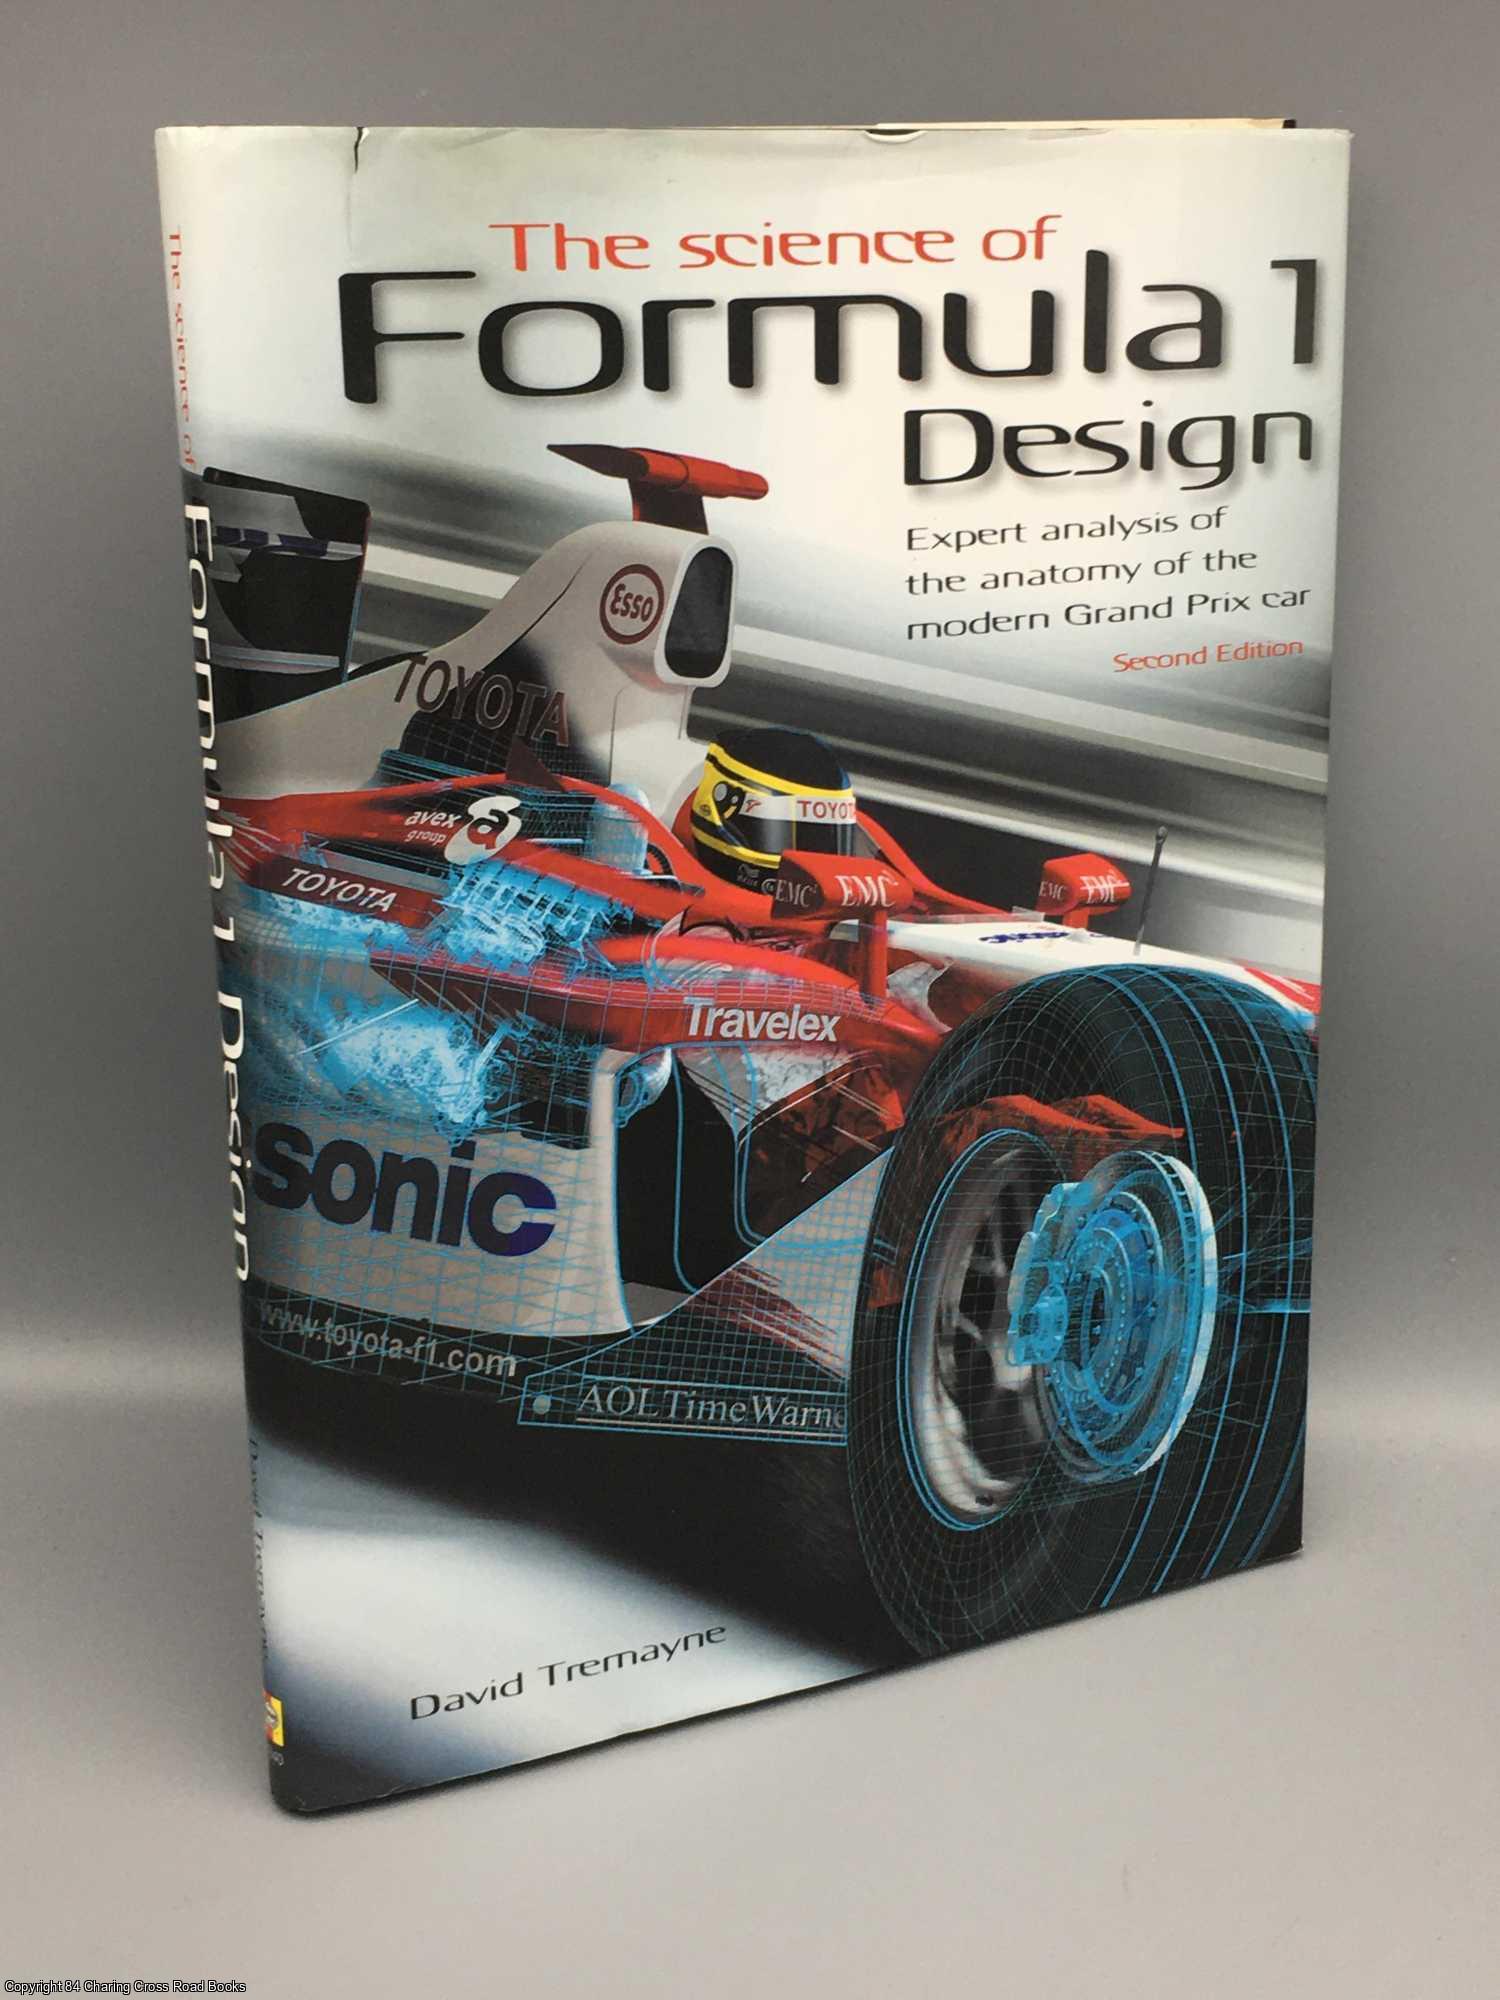 Tremayne, David - The Science of Formula 1 Design: expert analysis of the anatomy of the modern Grand Prix car